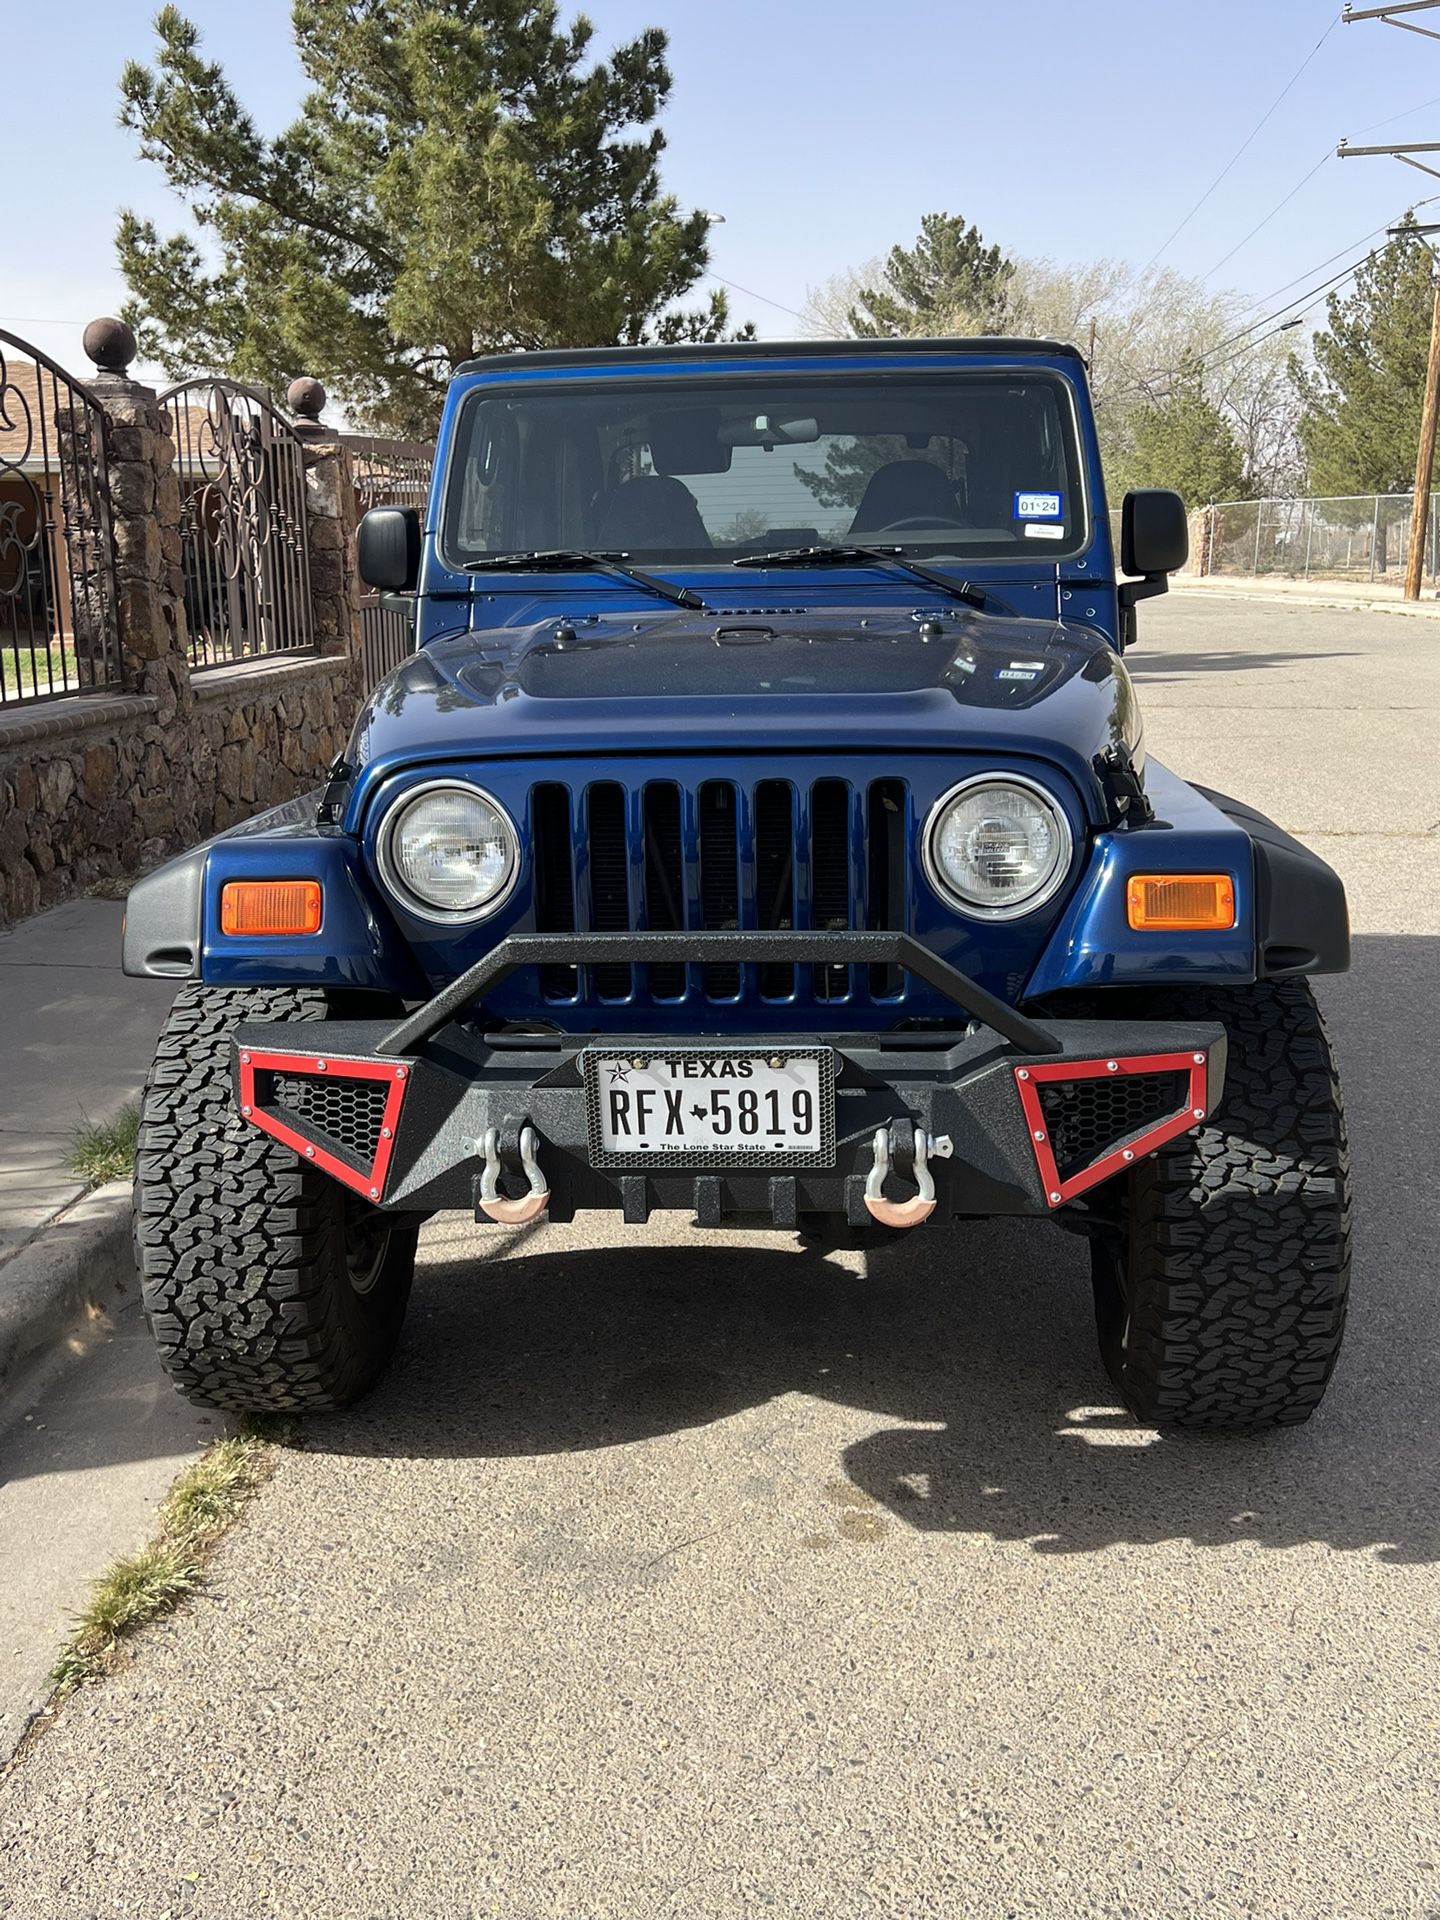 2002 Jeep Wrangler for Sale in El Paso, TX - OfferUp